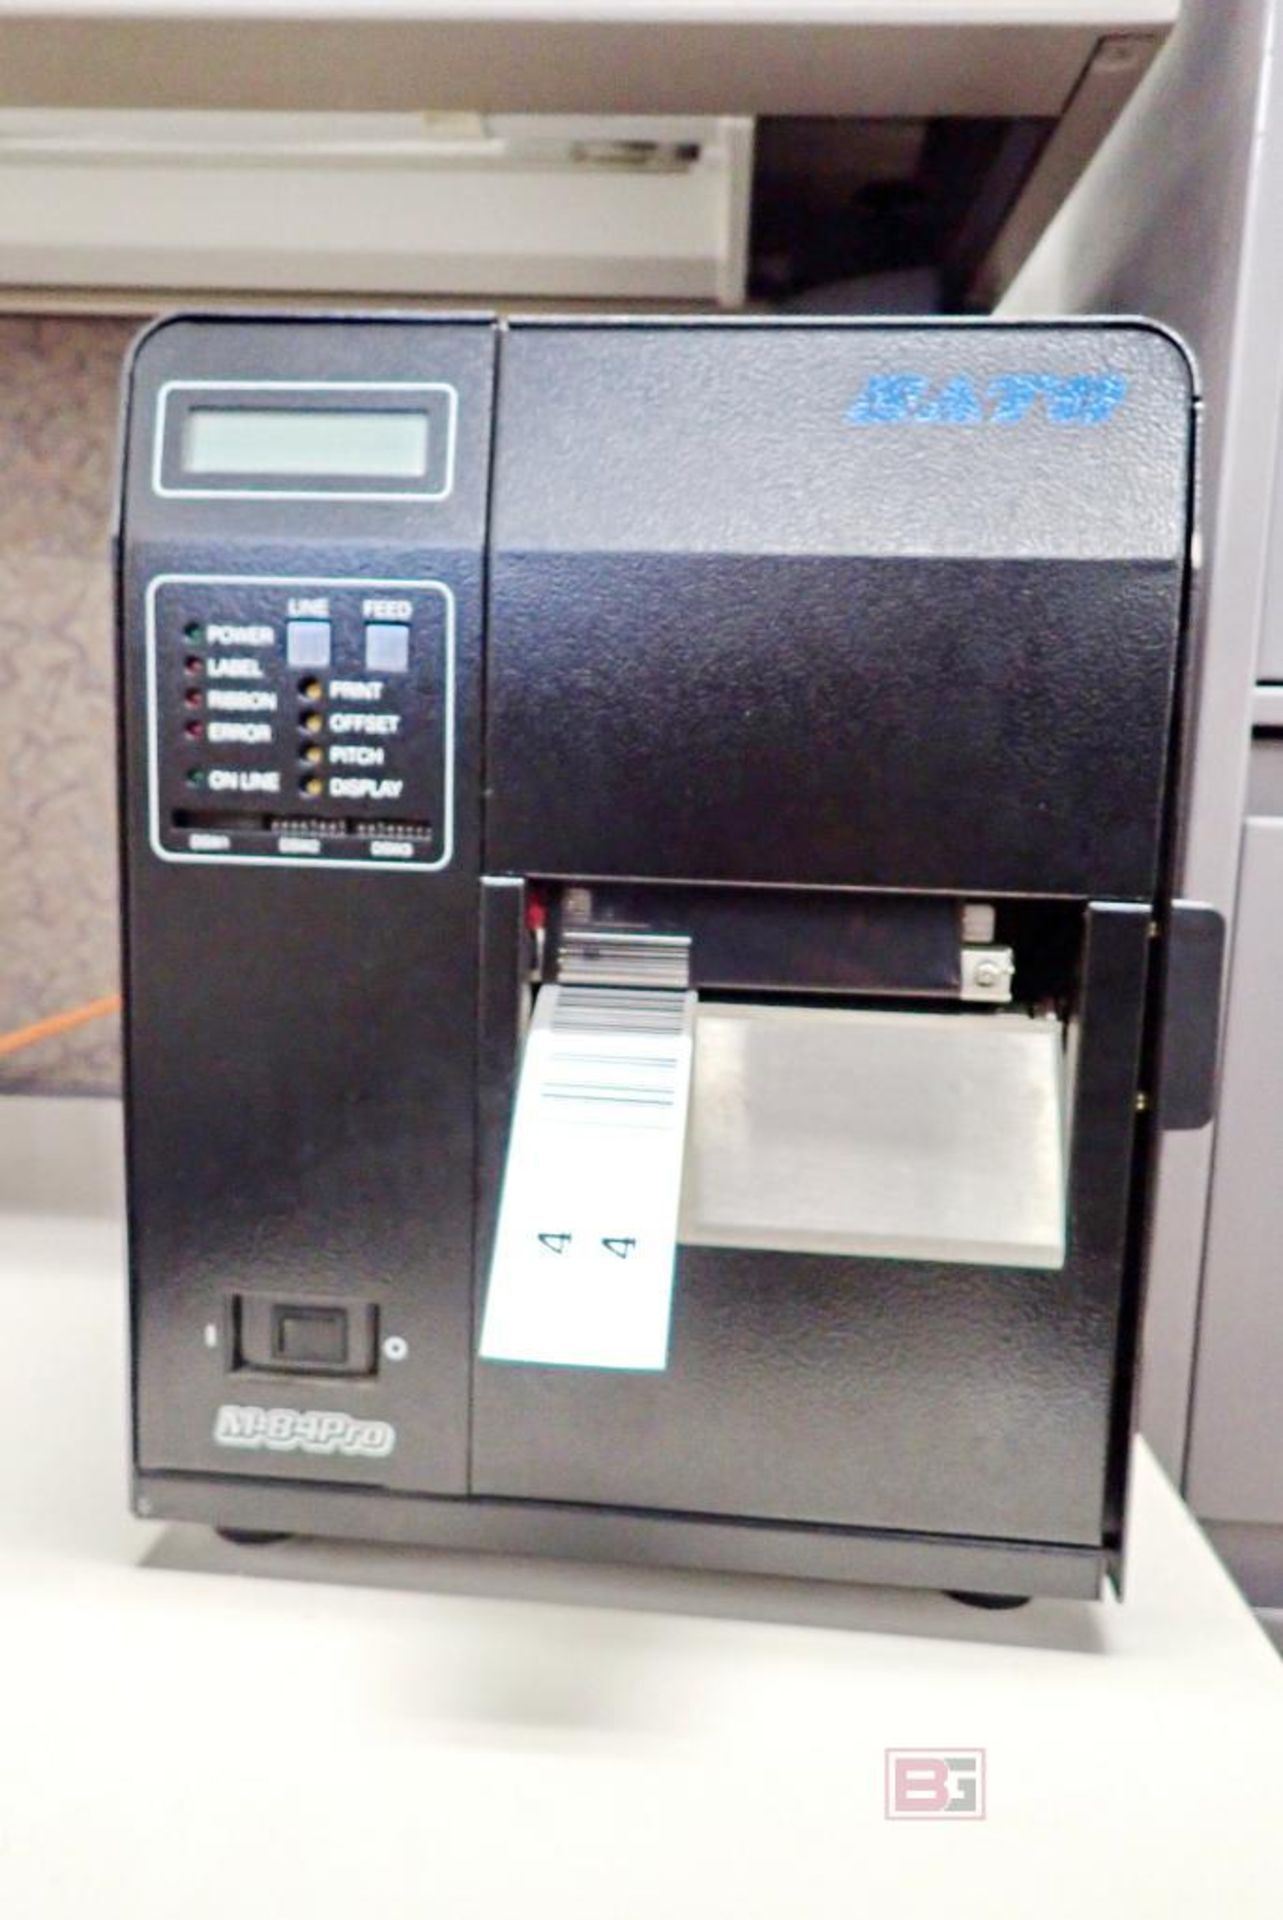 SATO M-84Pro Label Printer - Image 2 of 6